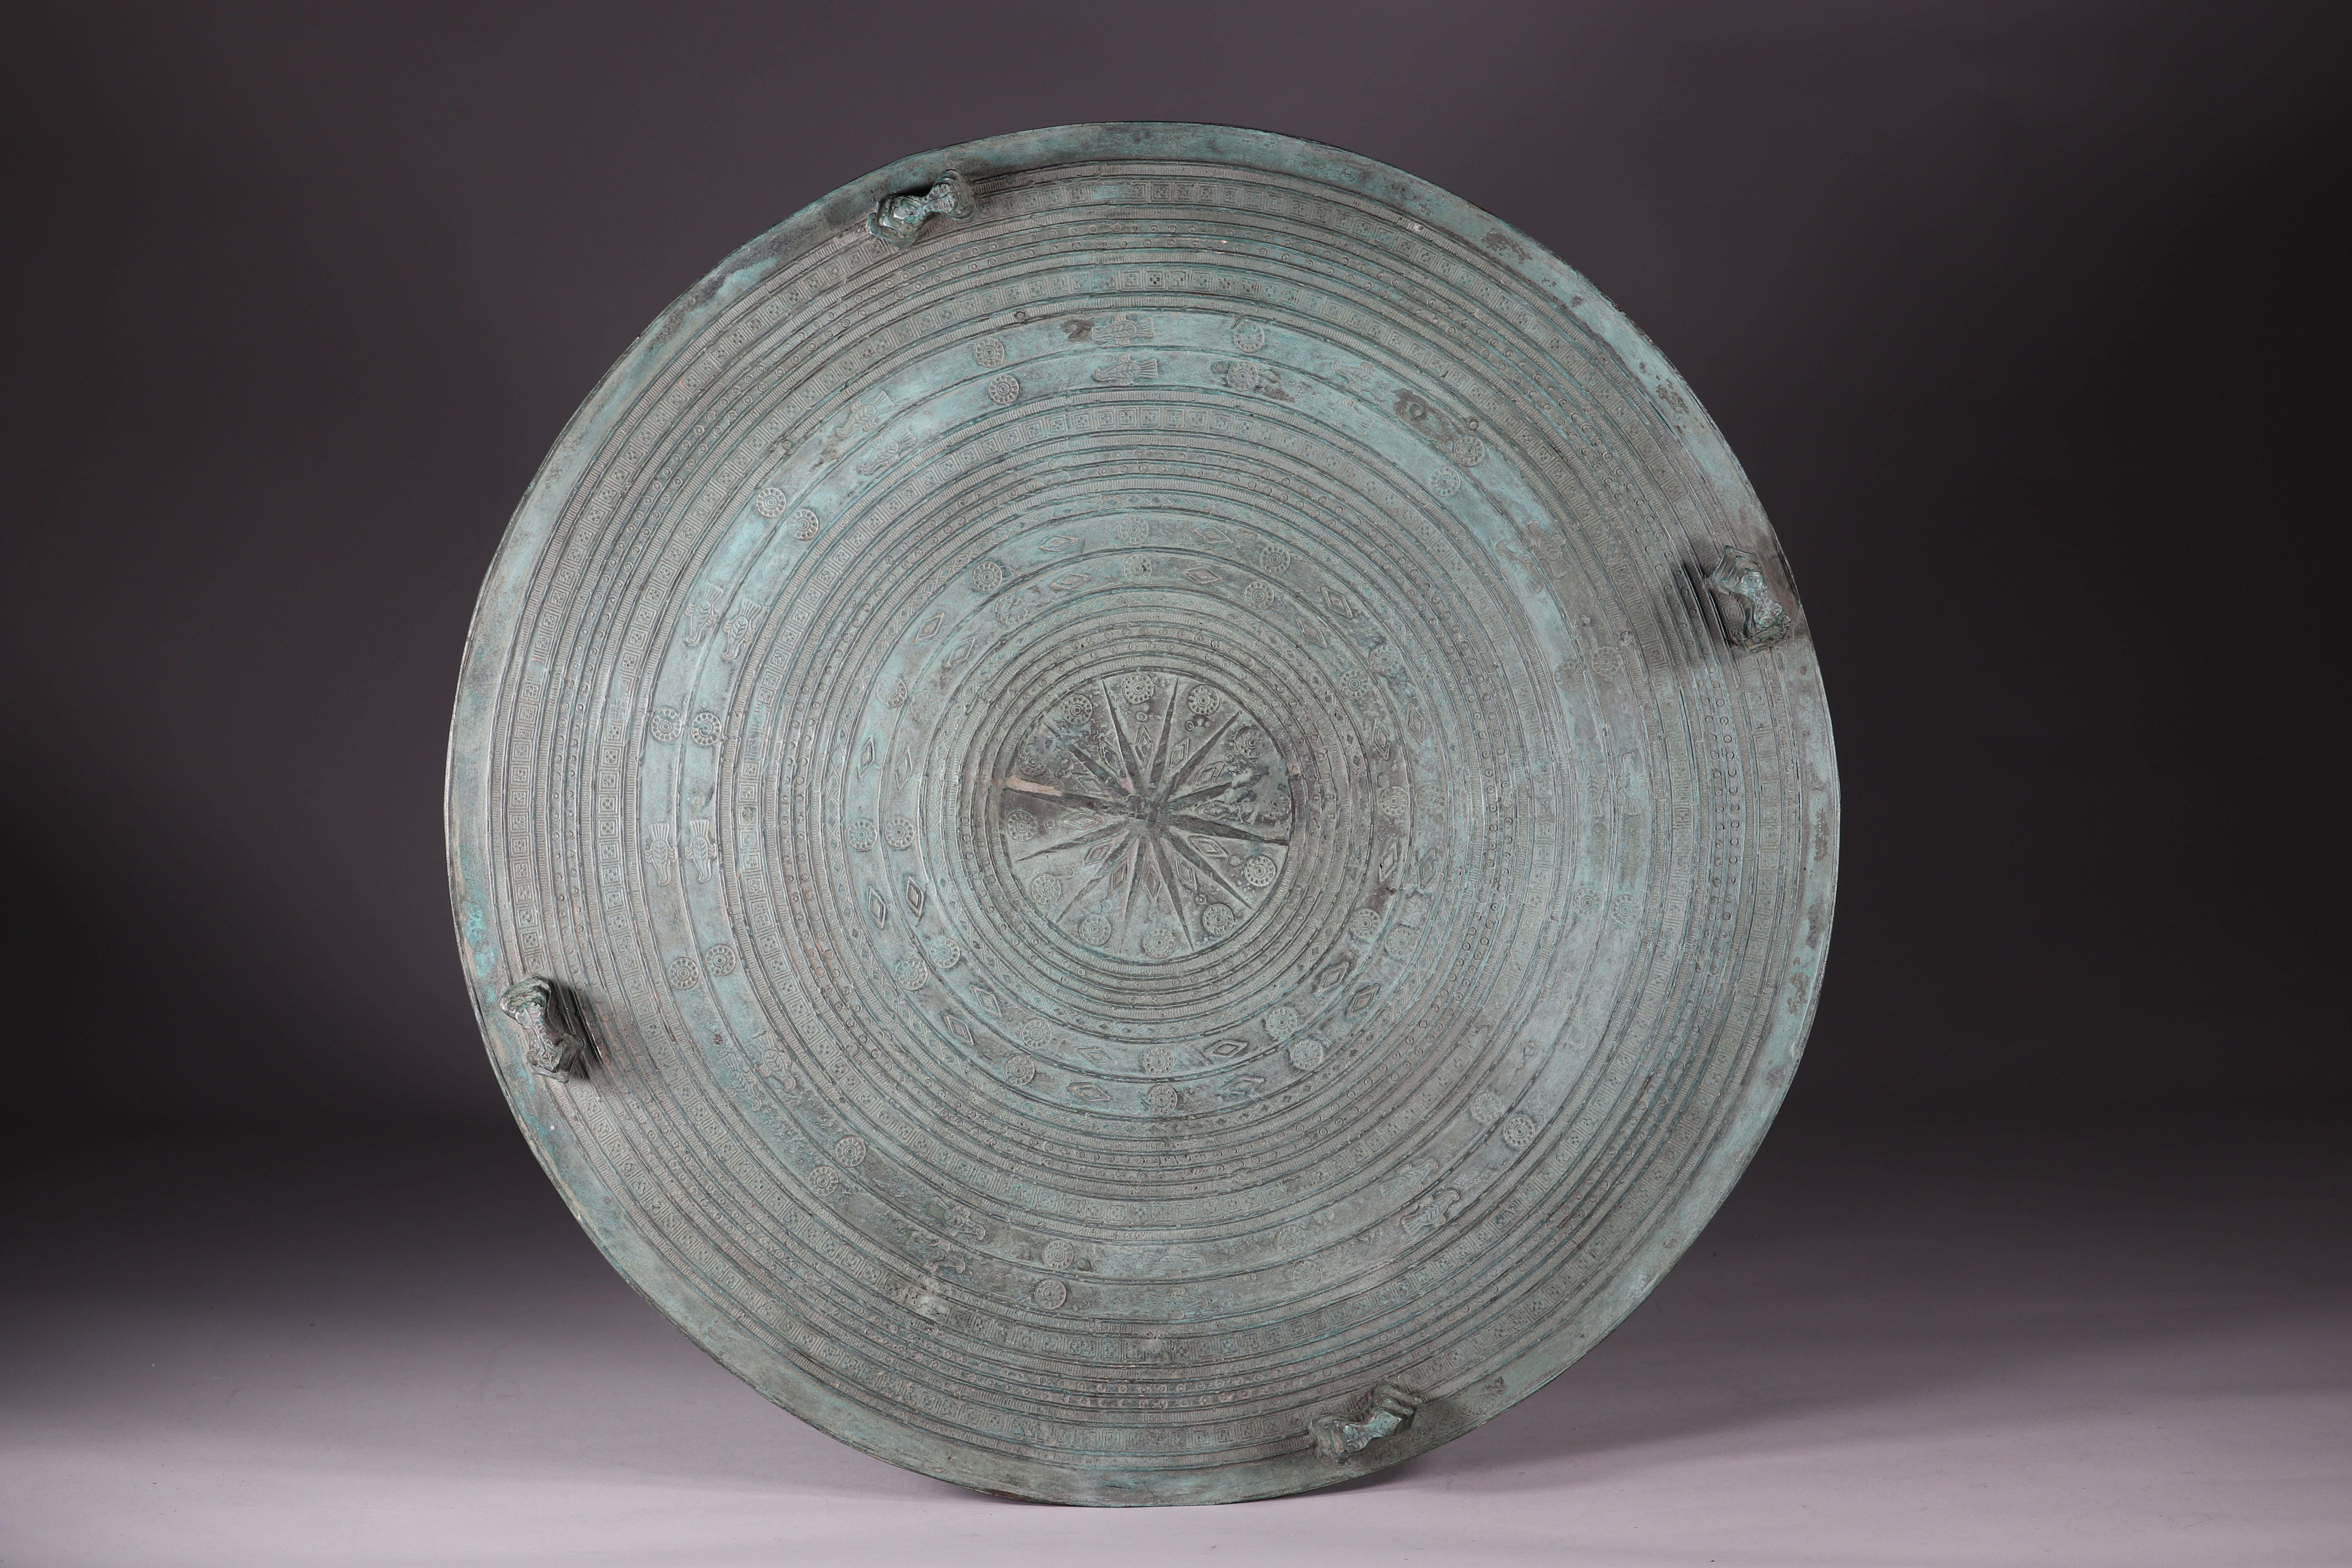 Vietnam ritual object known as bronze rain drum - Image 3 of 3